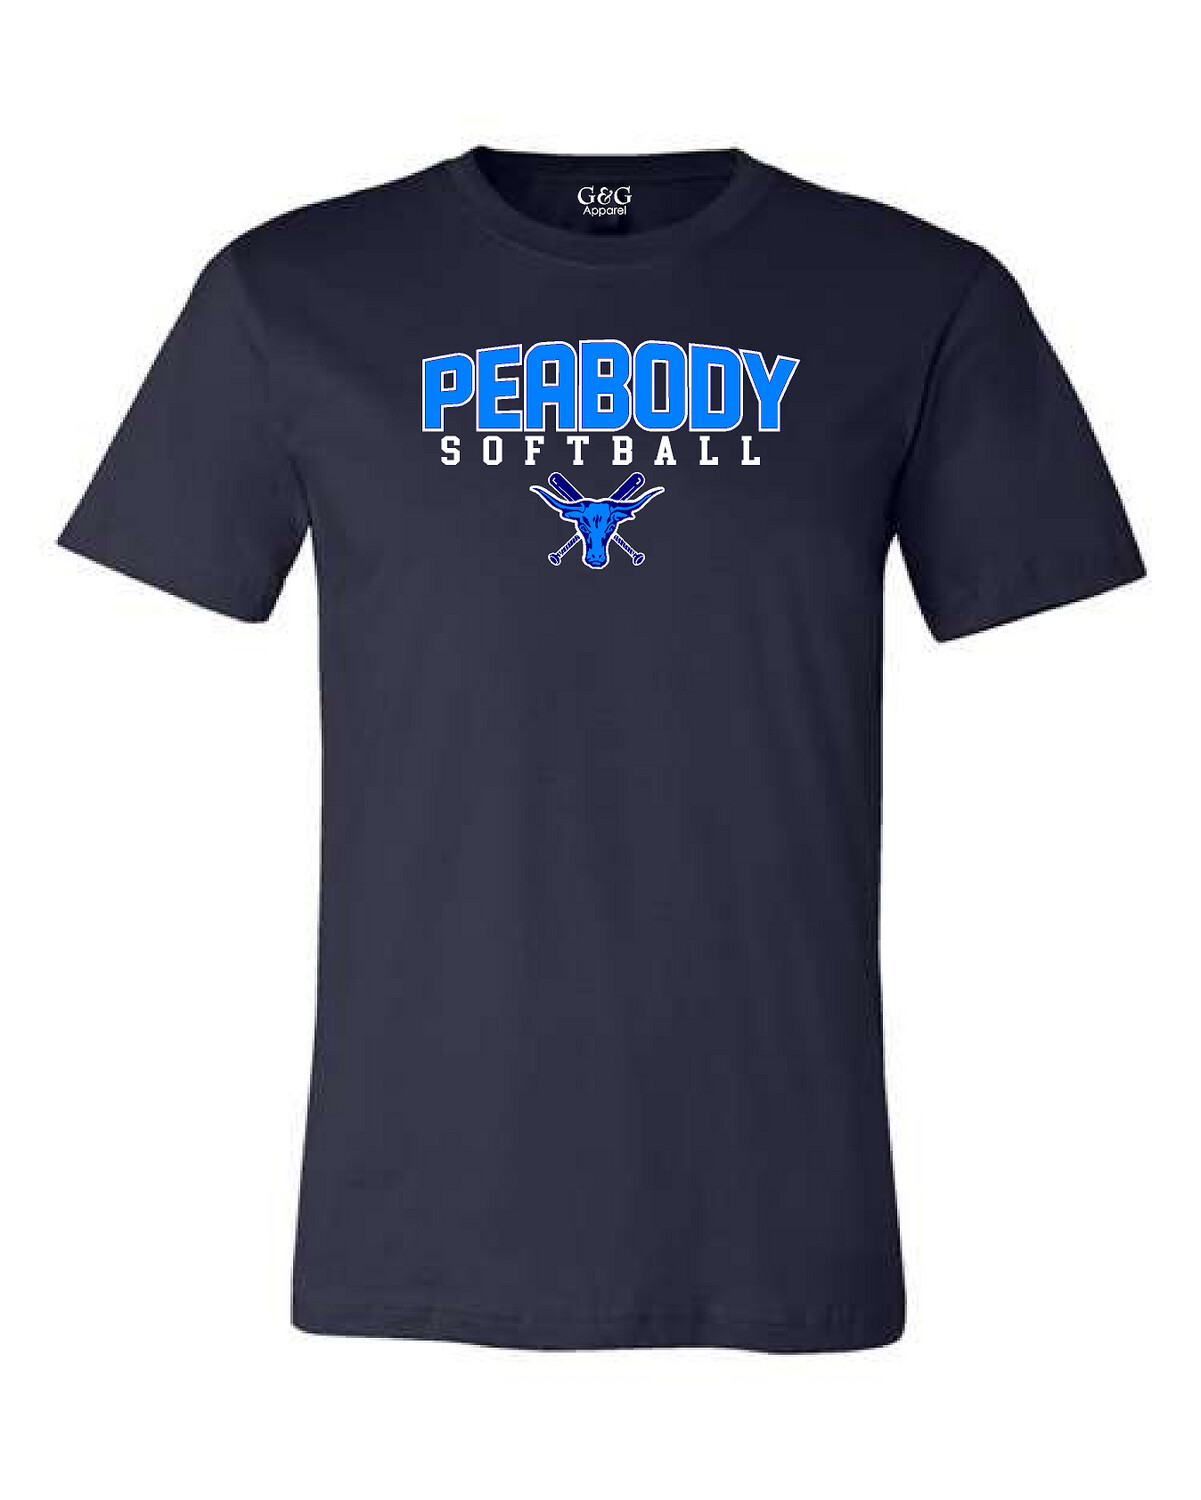 Unisex Youth & Adult 50/50 Dri-Power Peabody Softball T-Shirt 1.0